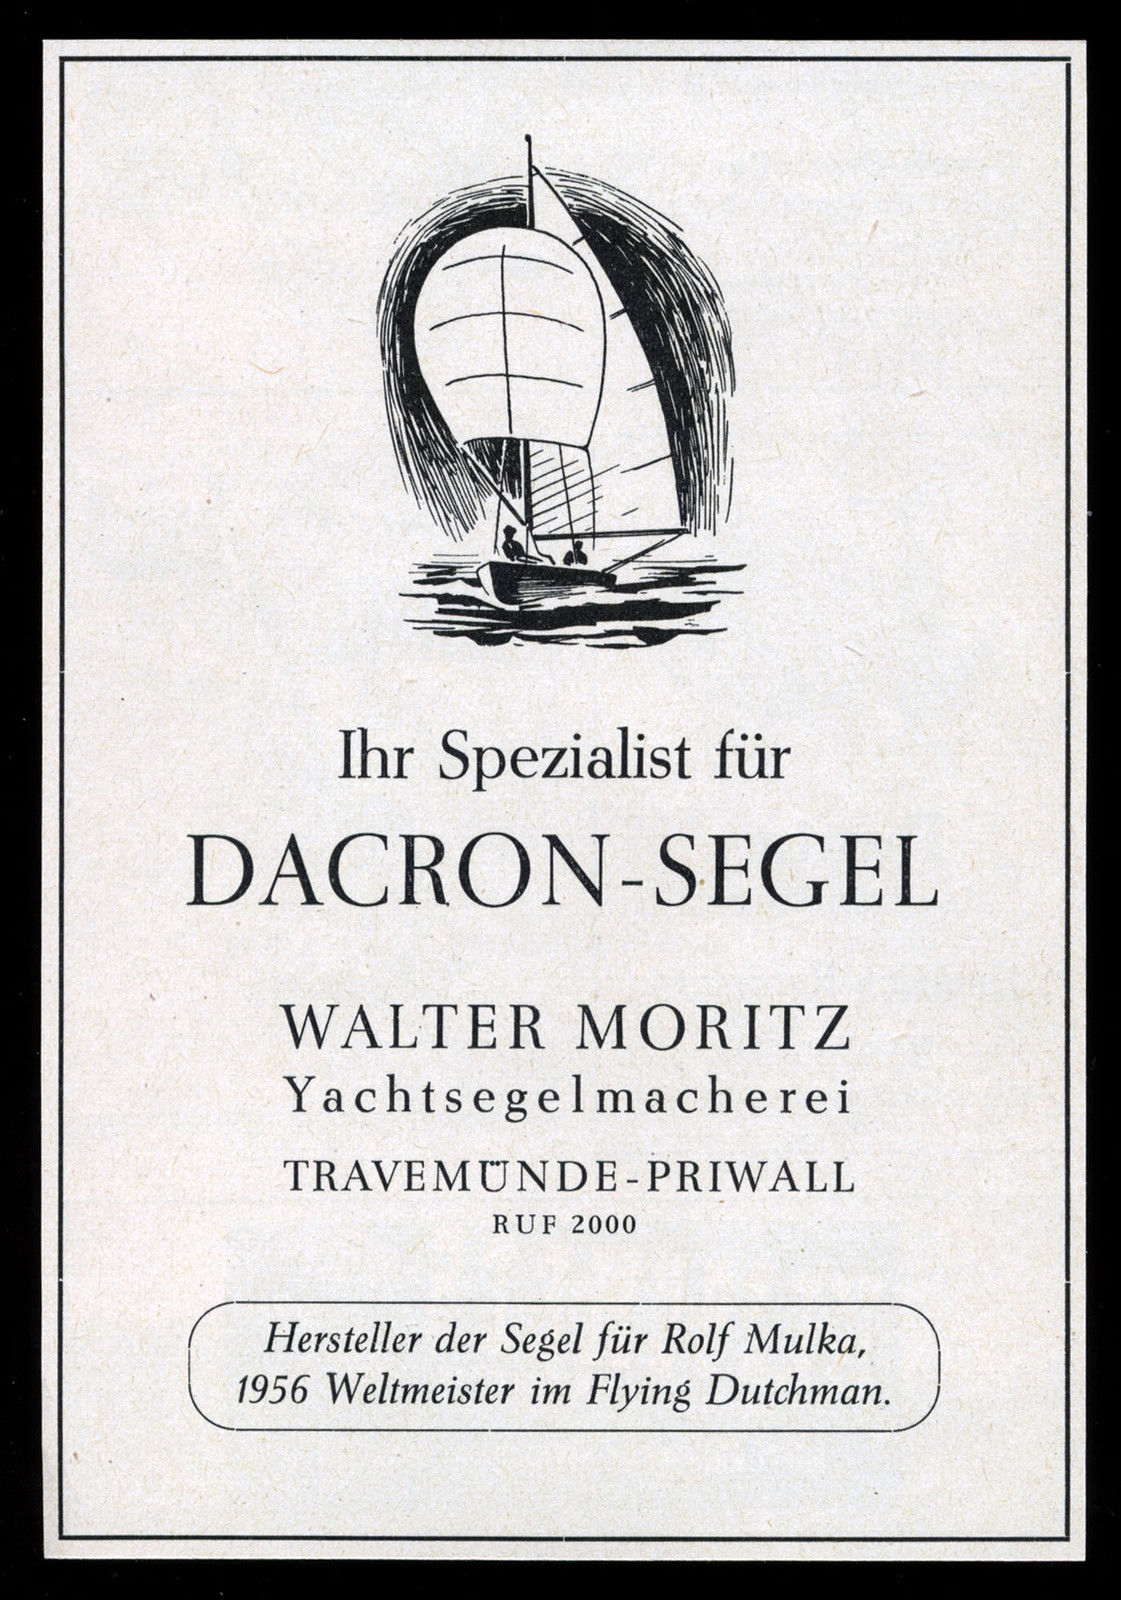 Walter Moritz werbung